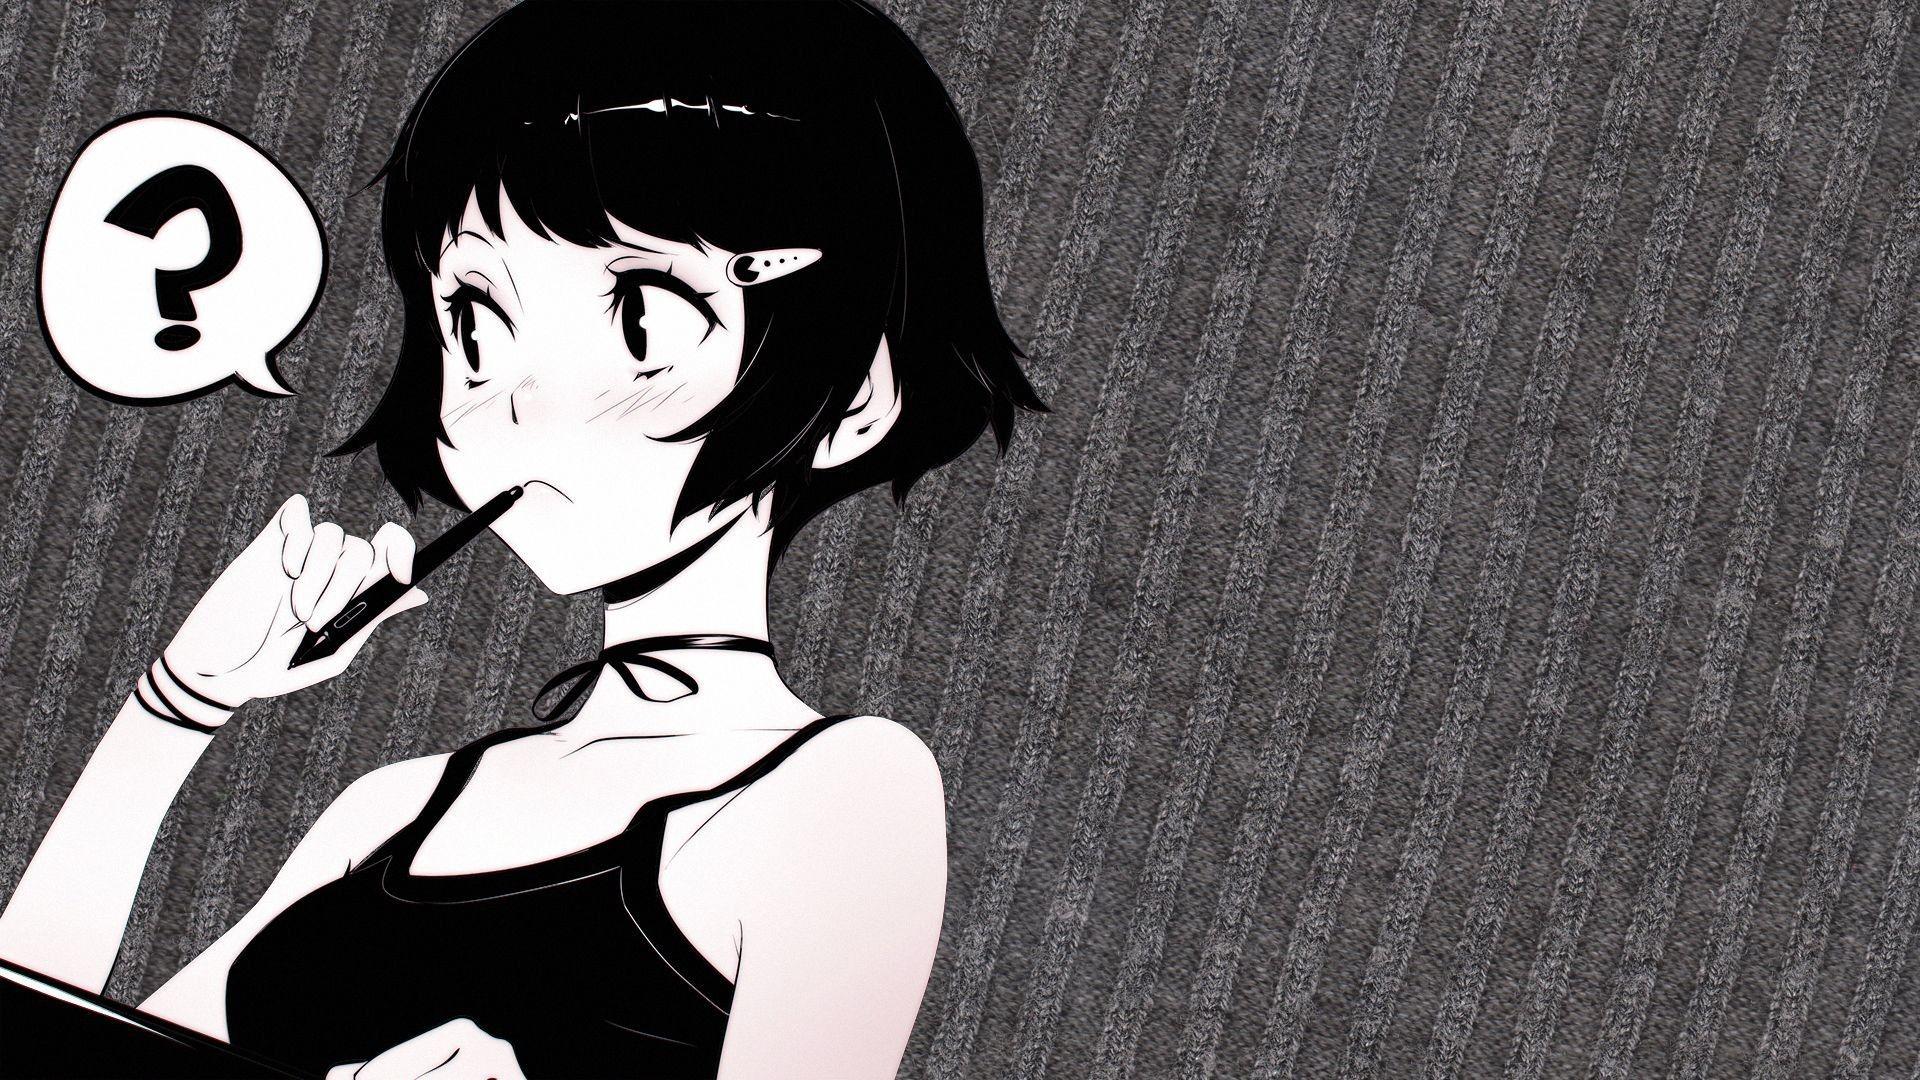 Dark Anime Aesthetic Wallpapers - Top Free Dark Anime Aesthetic